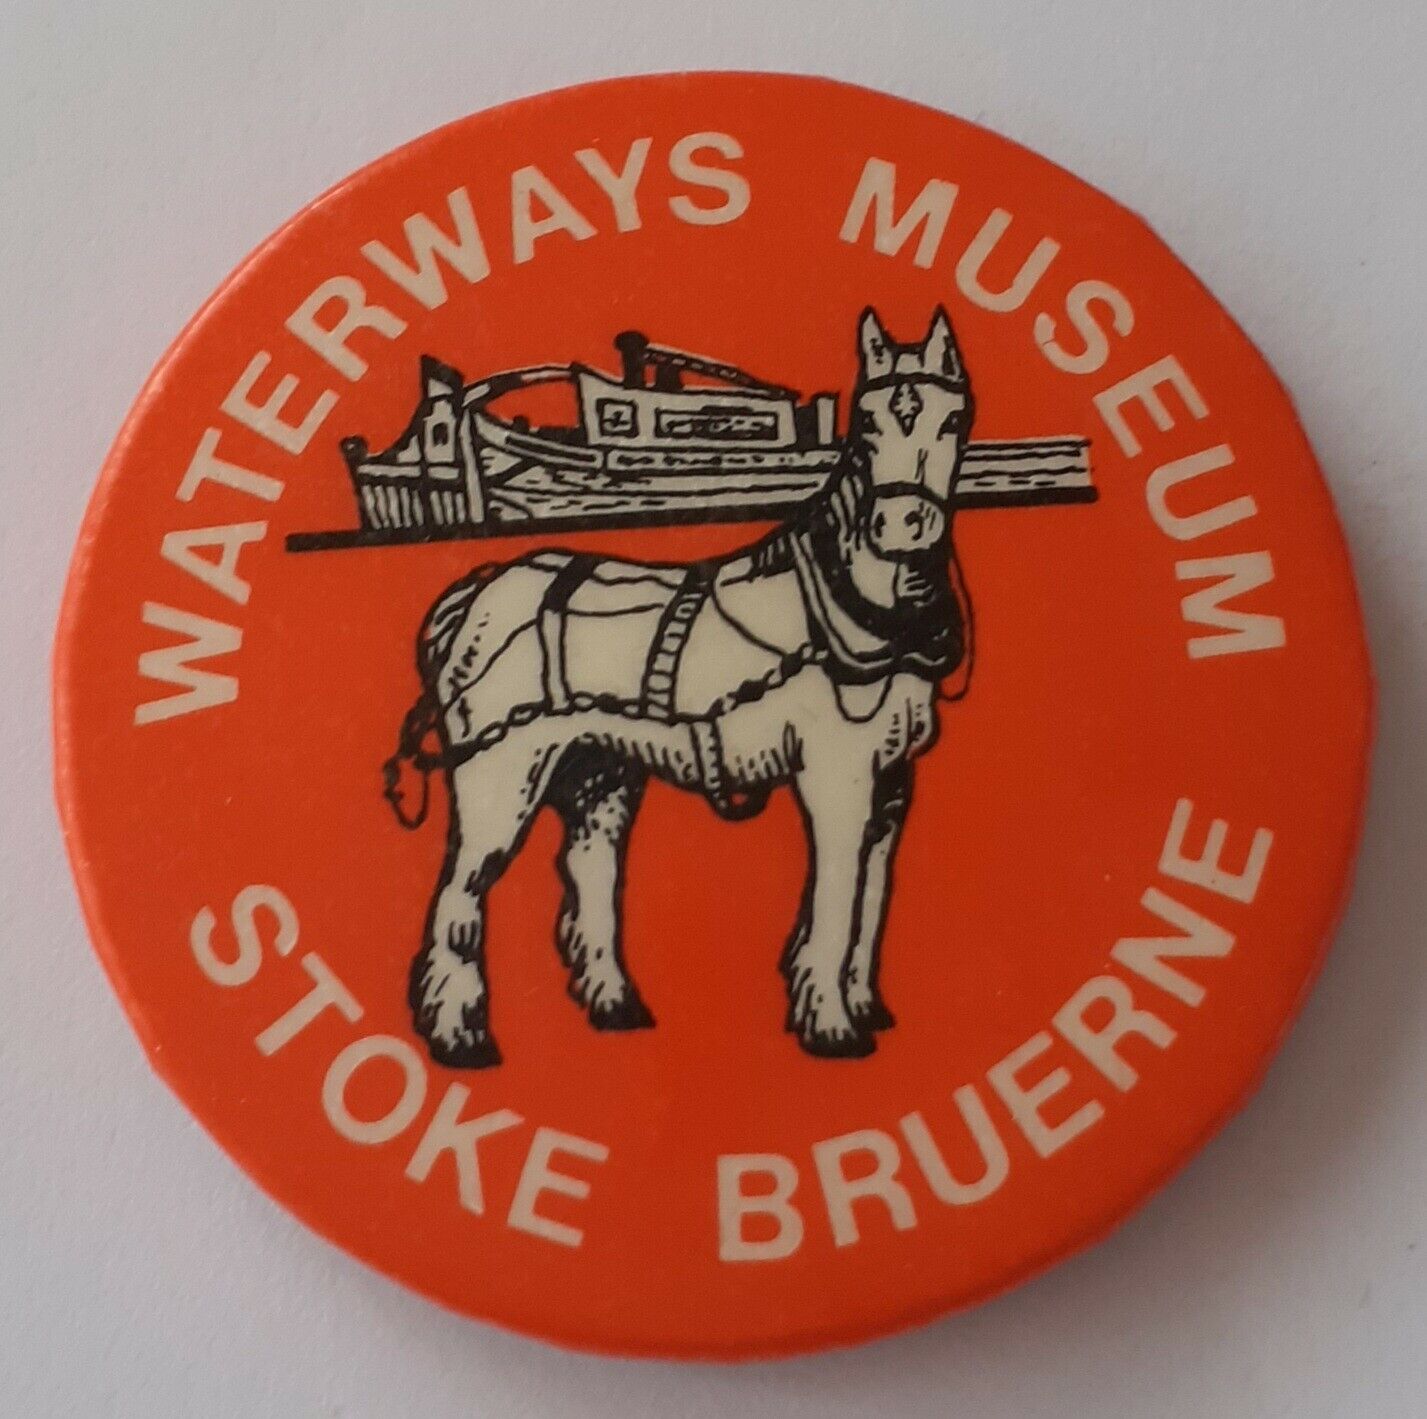 Button Badge: Waterways Museum Stoke Bruerne